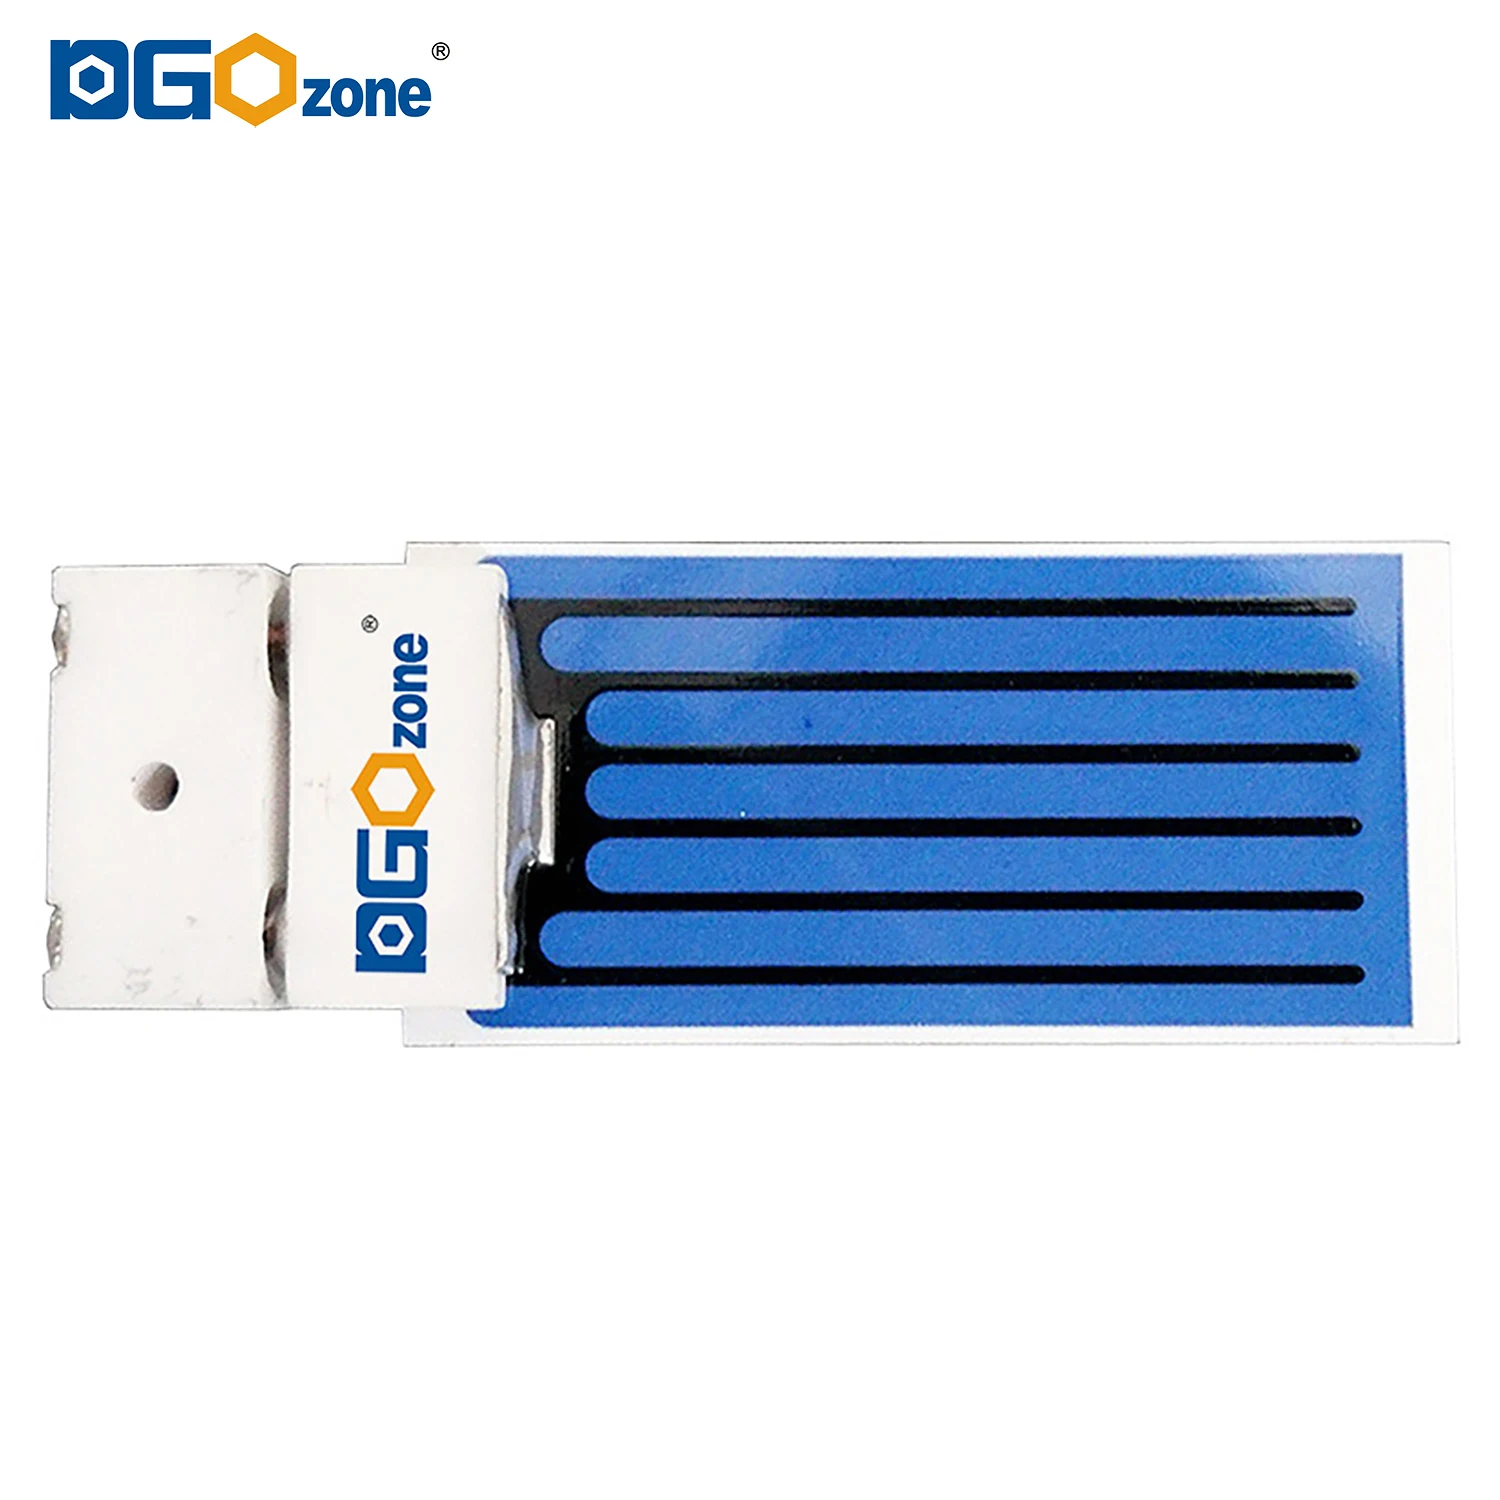 DGOzone 2 gr ozone plate long life ceramic plate for ozone generator 2000 mg